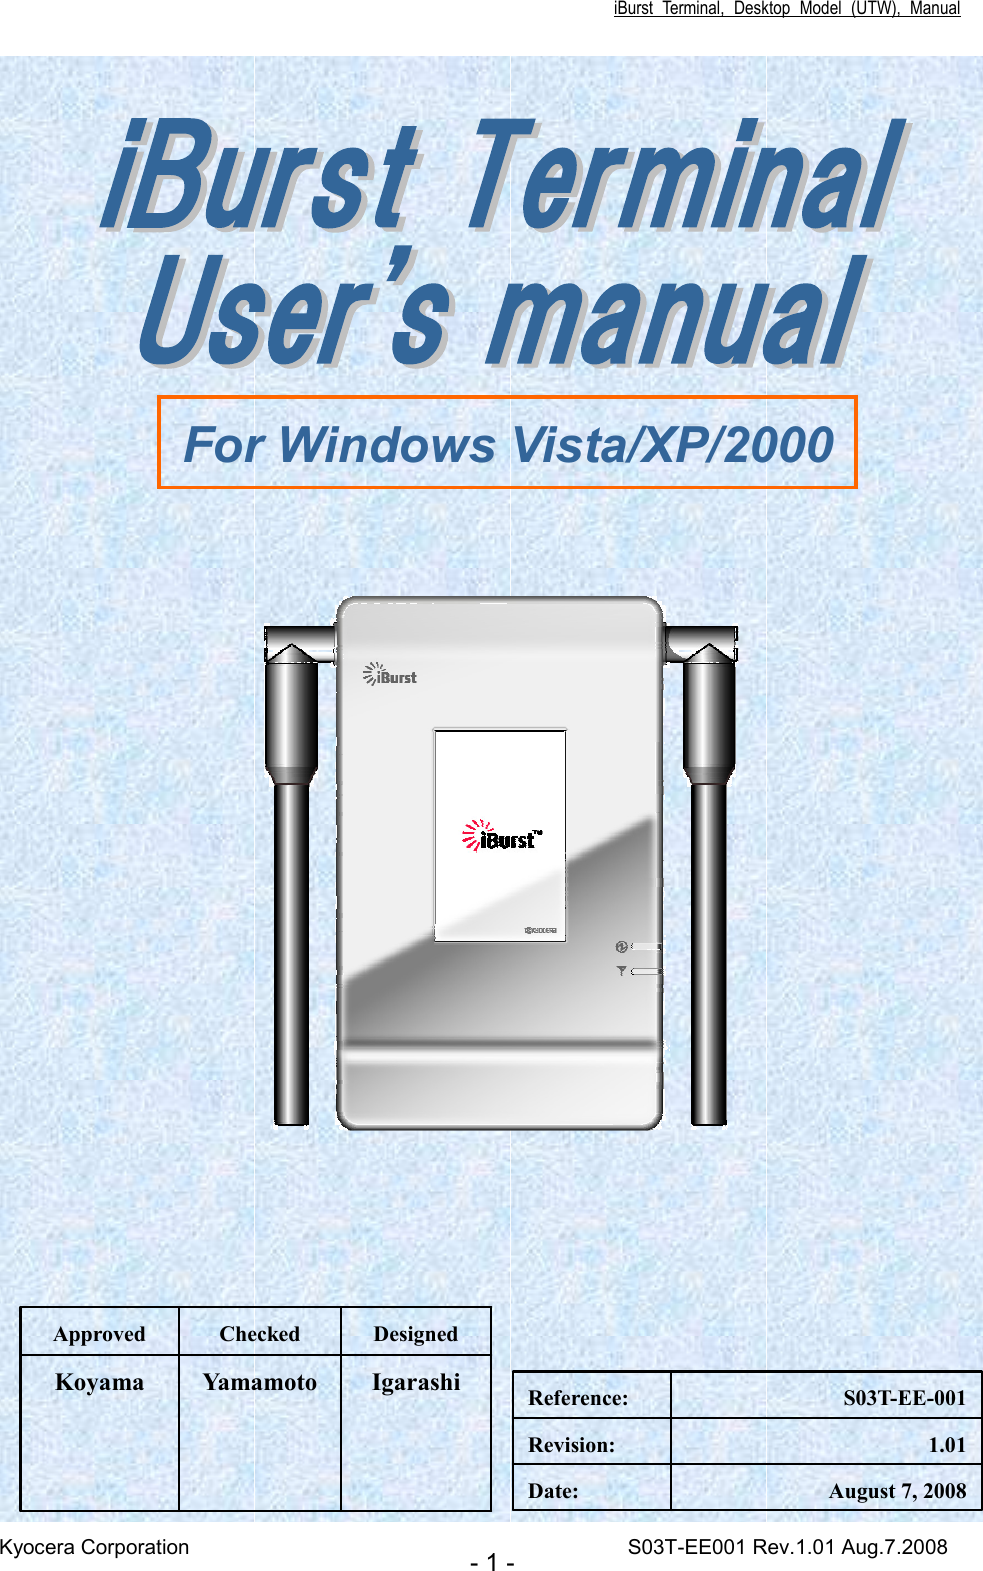 iBurst  Terminal,  Desktop  Model  (UTW),  Manual Kyocera Corporation                                                                                    S03T-EE001 Rev.1.01 Aug.7.2008 - 1 -                             Igarashi Yamamoto Koyama Designed Checked Approved August 7, 2008 Date: 1.01 Revision: S03T-EE-001 Reference: For Windows Vista/XP/2000 